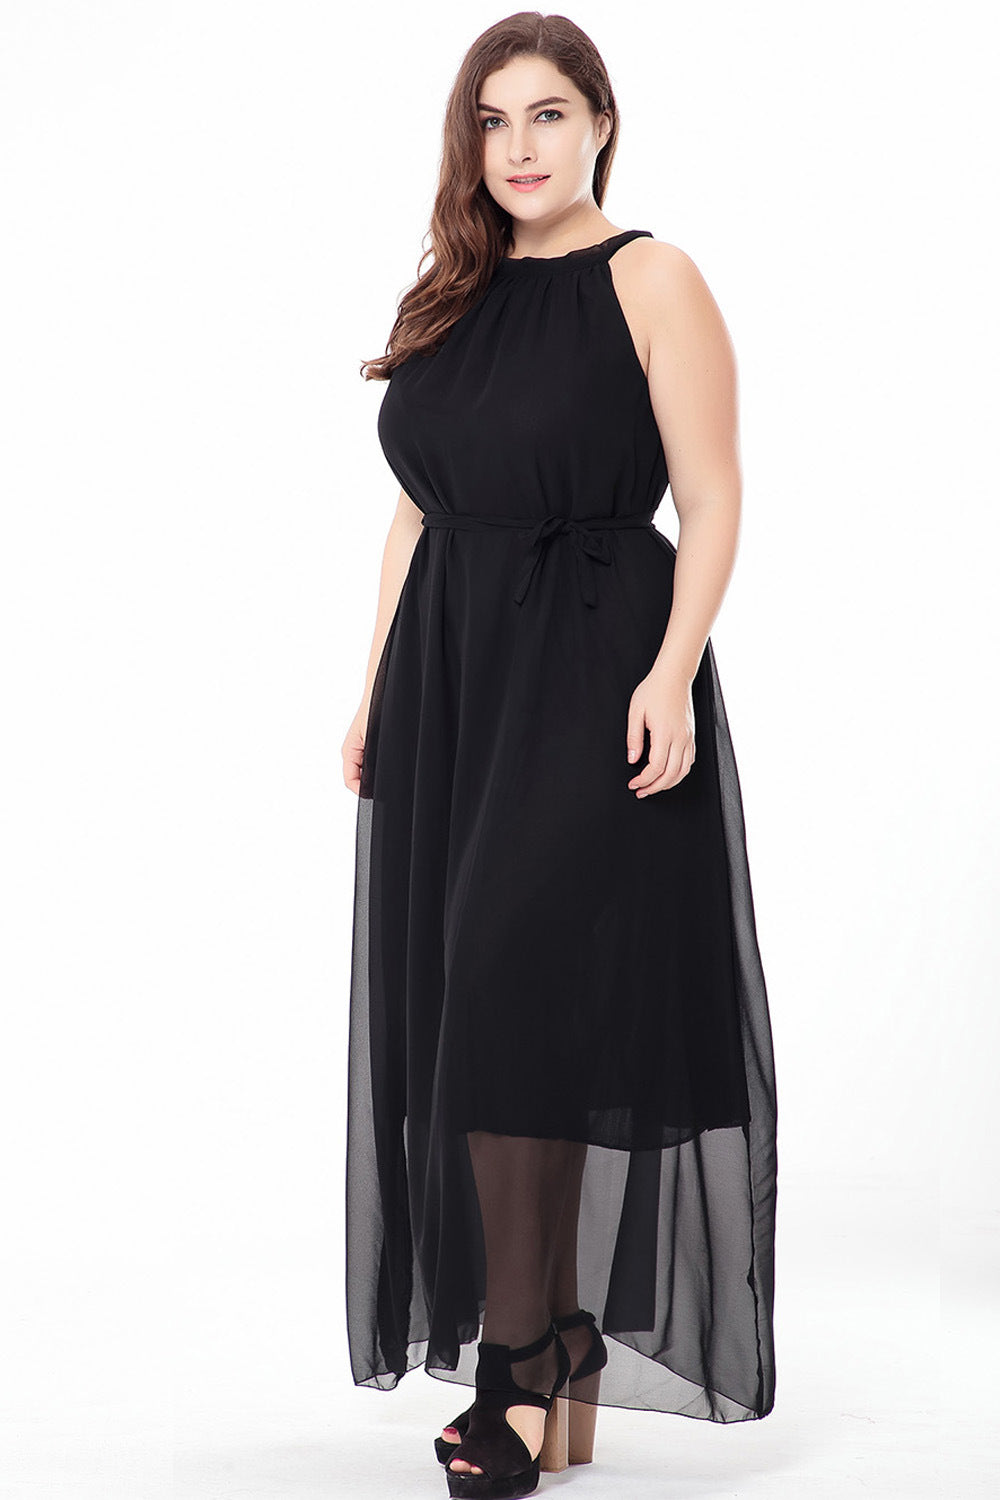 Summer Boho Plus Sizes Chiffon Dresses-Maxi Dresses-Free Shipping at meselling99